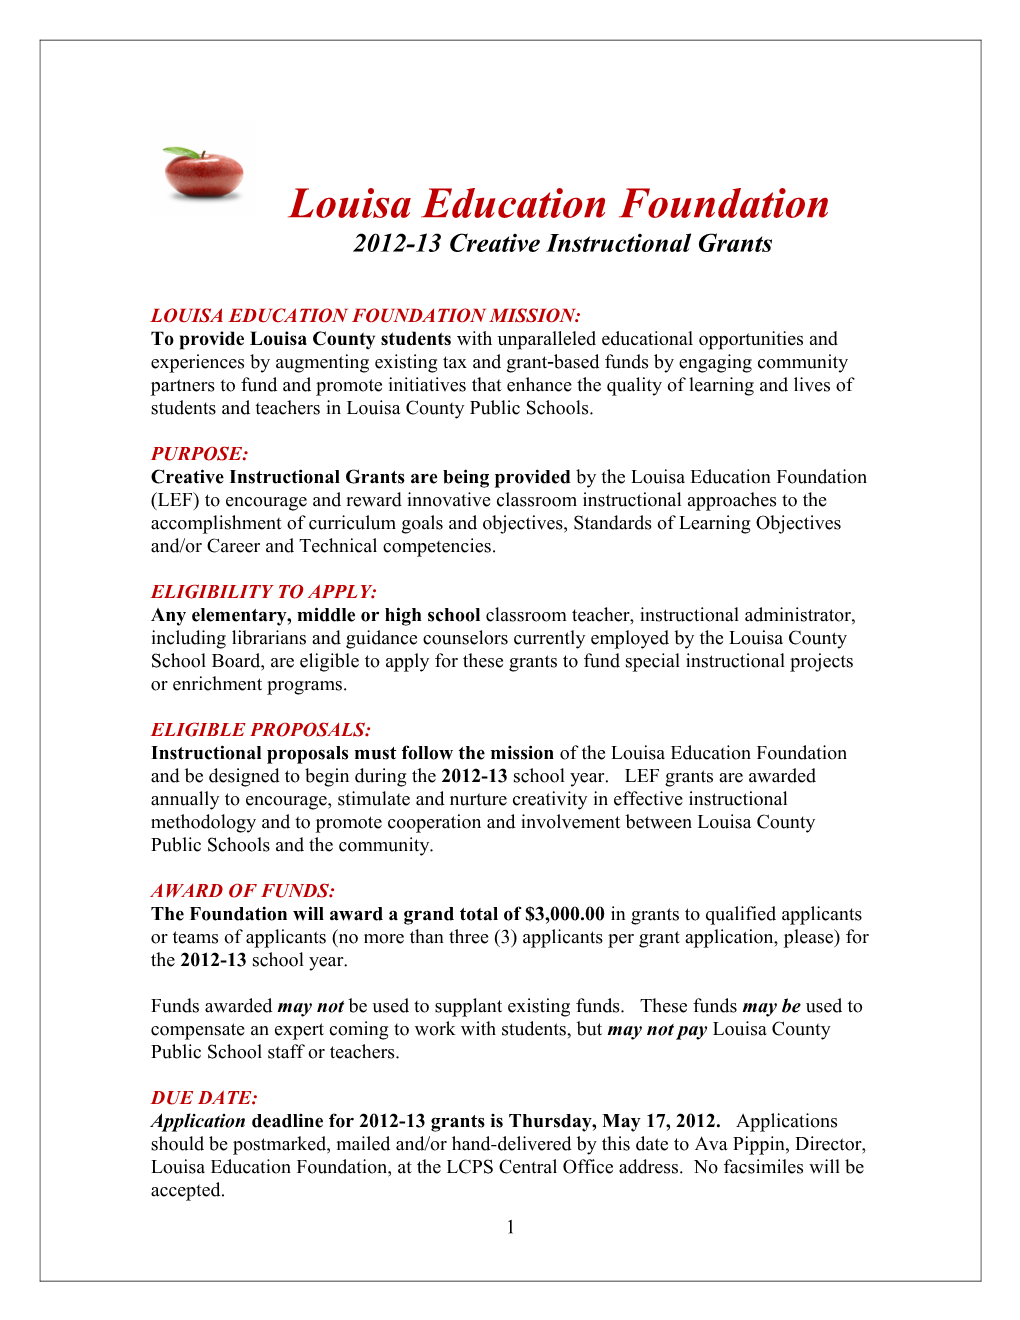 Louisa Education Foundation Mission